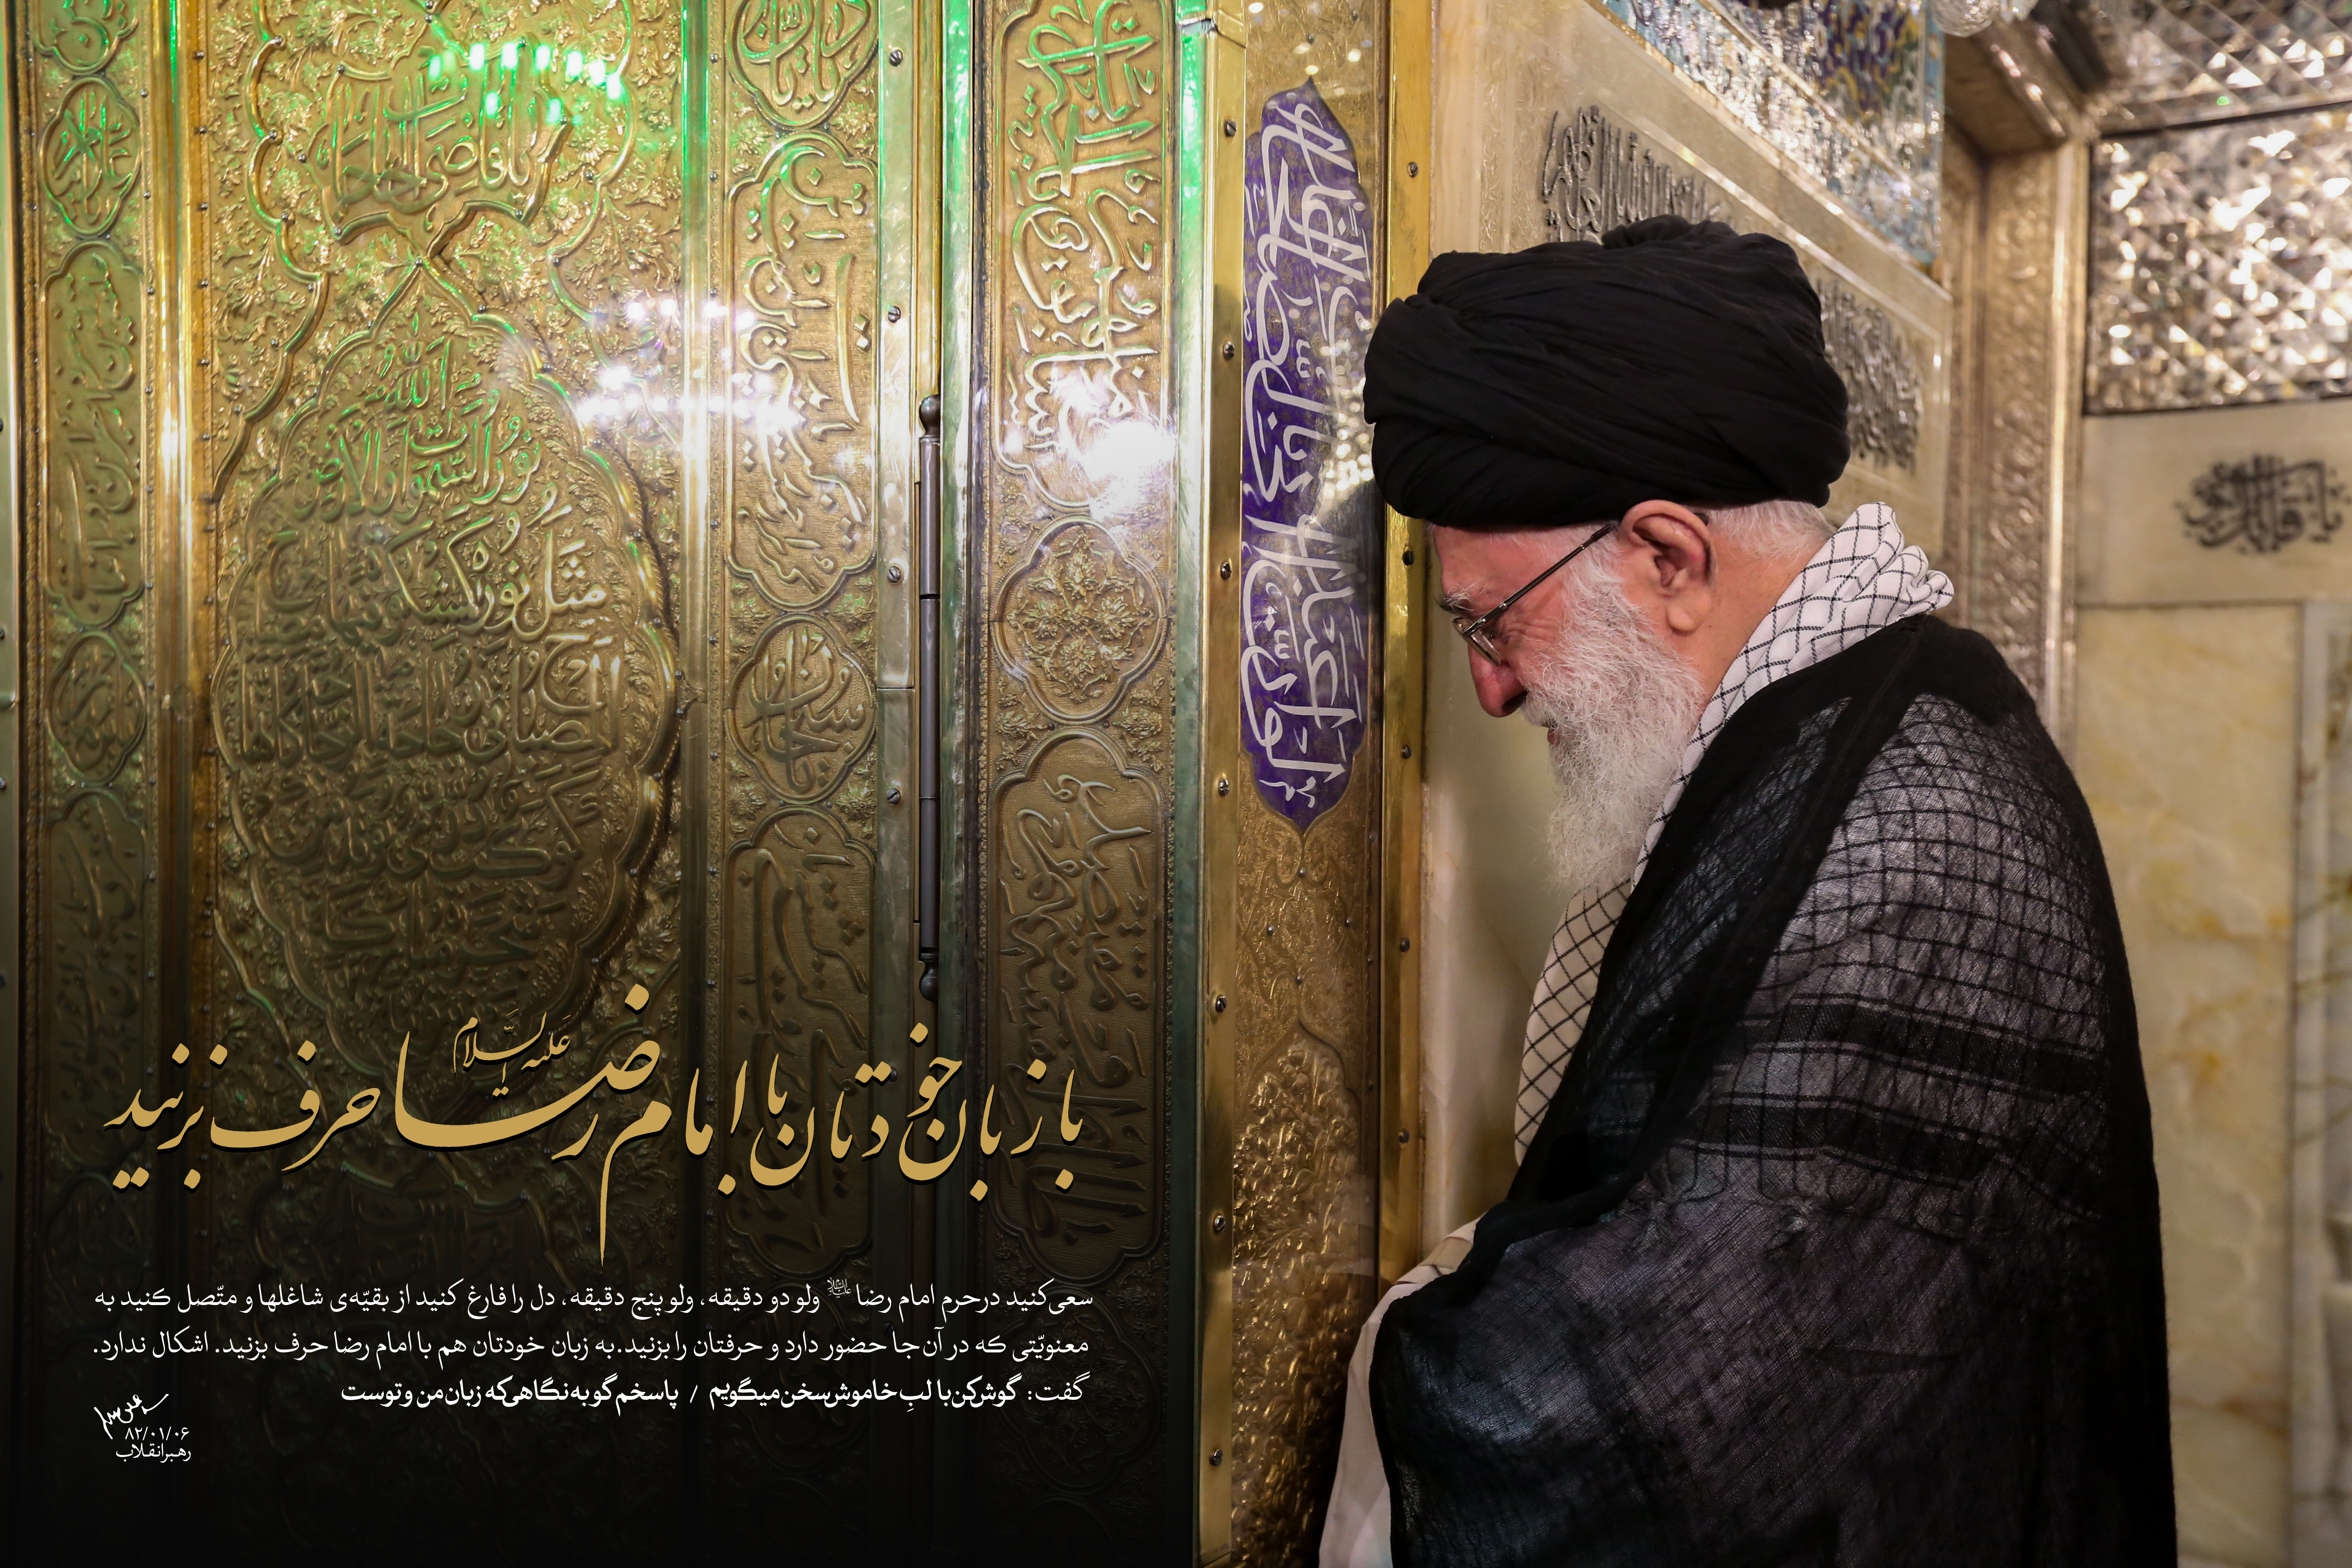 http://farsi.khamenei.ir/ndata/news/37312/B/13960512_0137312.jpg